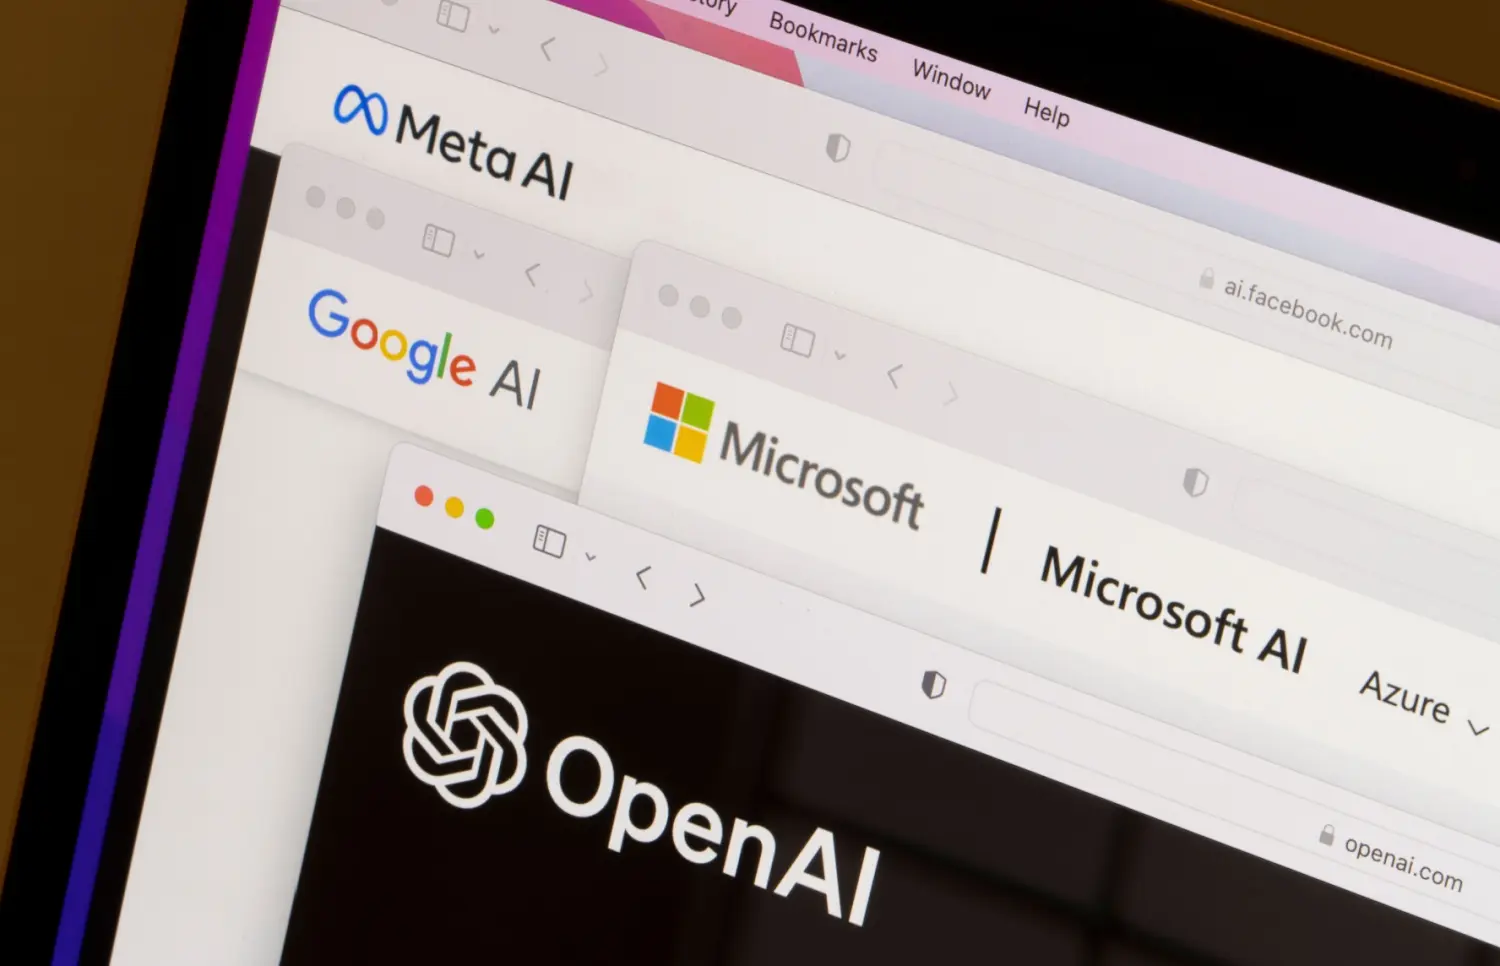 Webpages of OpenAI, Microsoft AI, Google AI, and Meta AI are seen on a laptop computer.